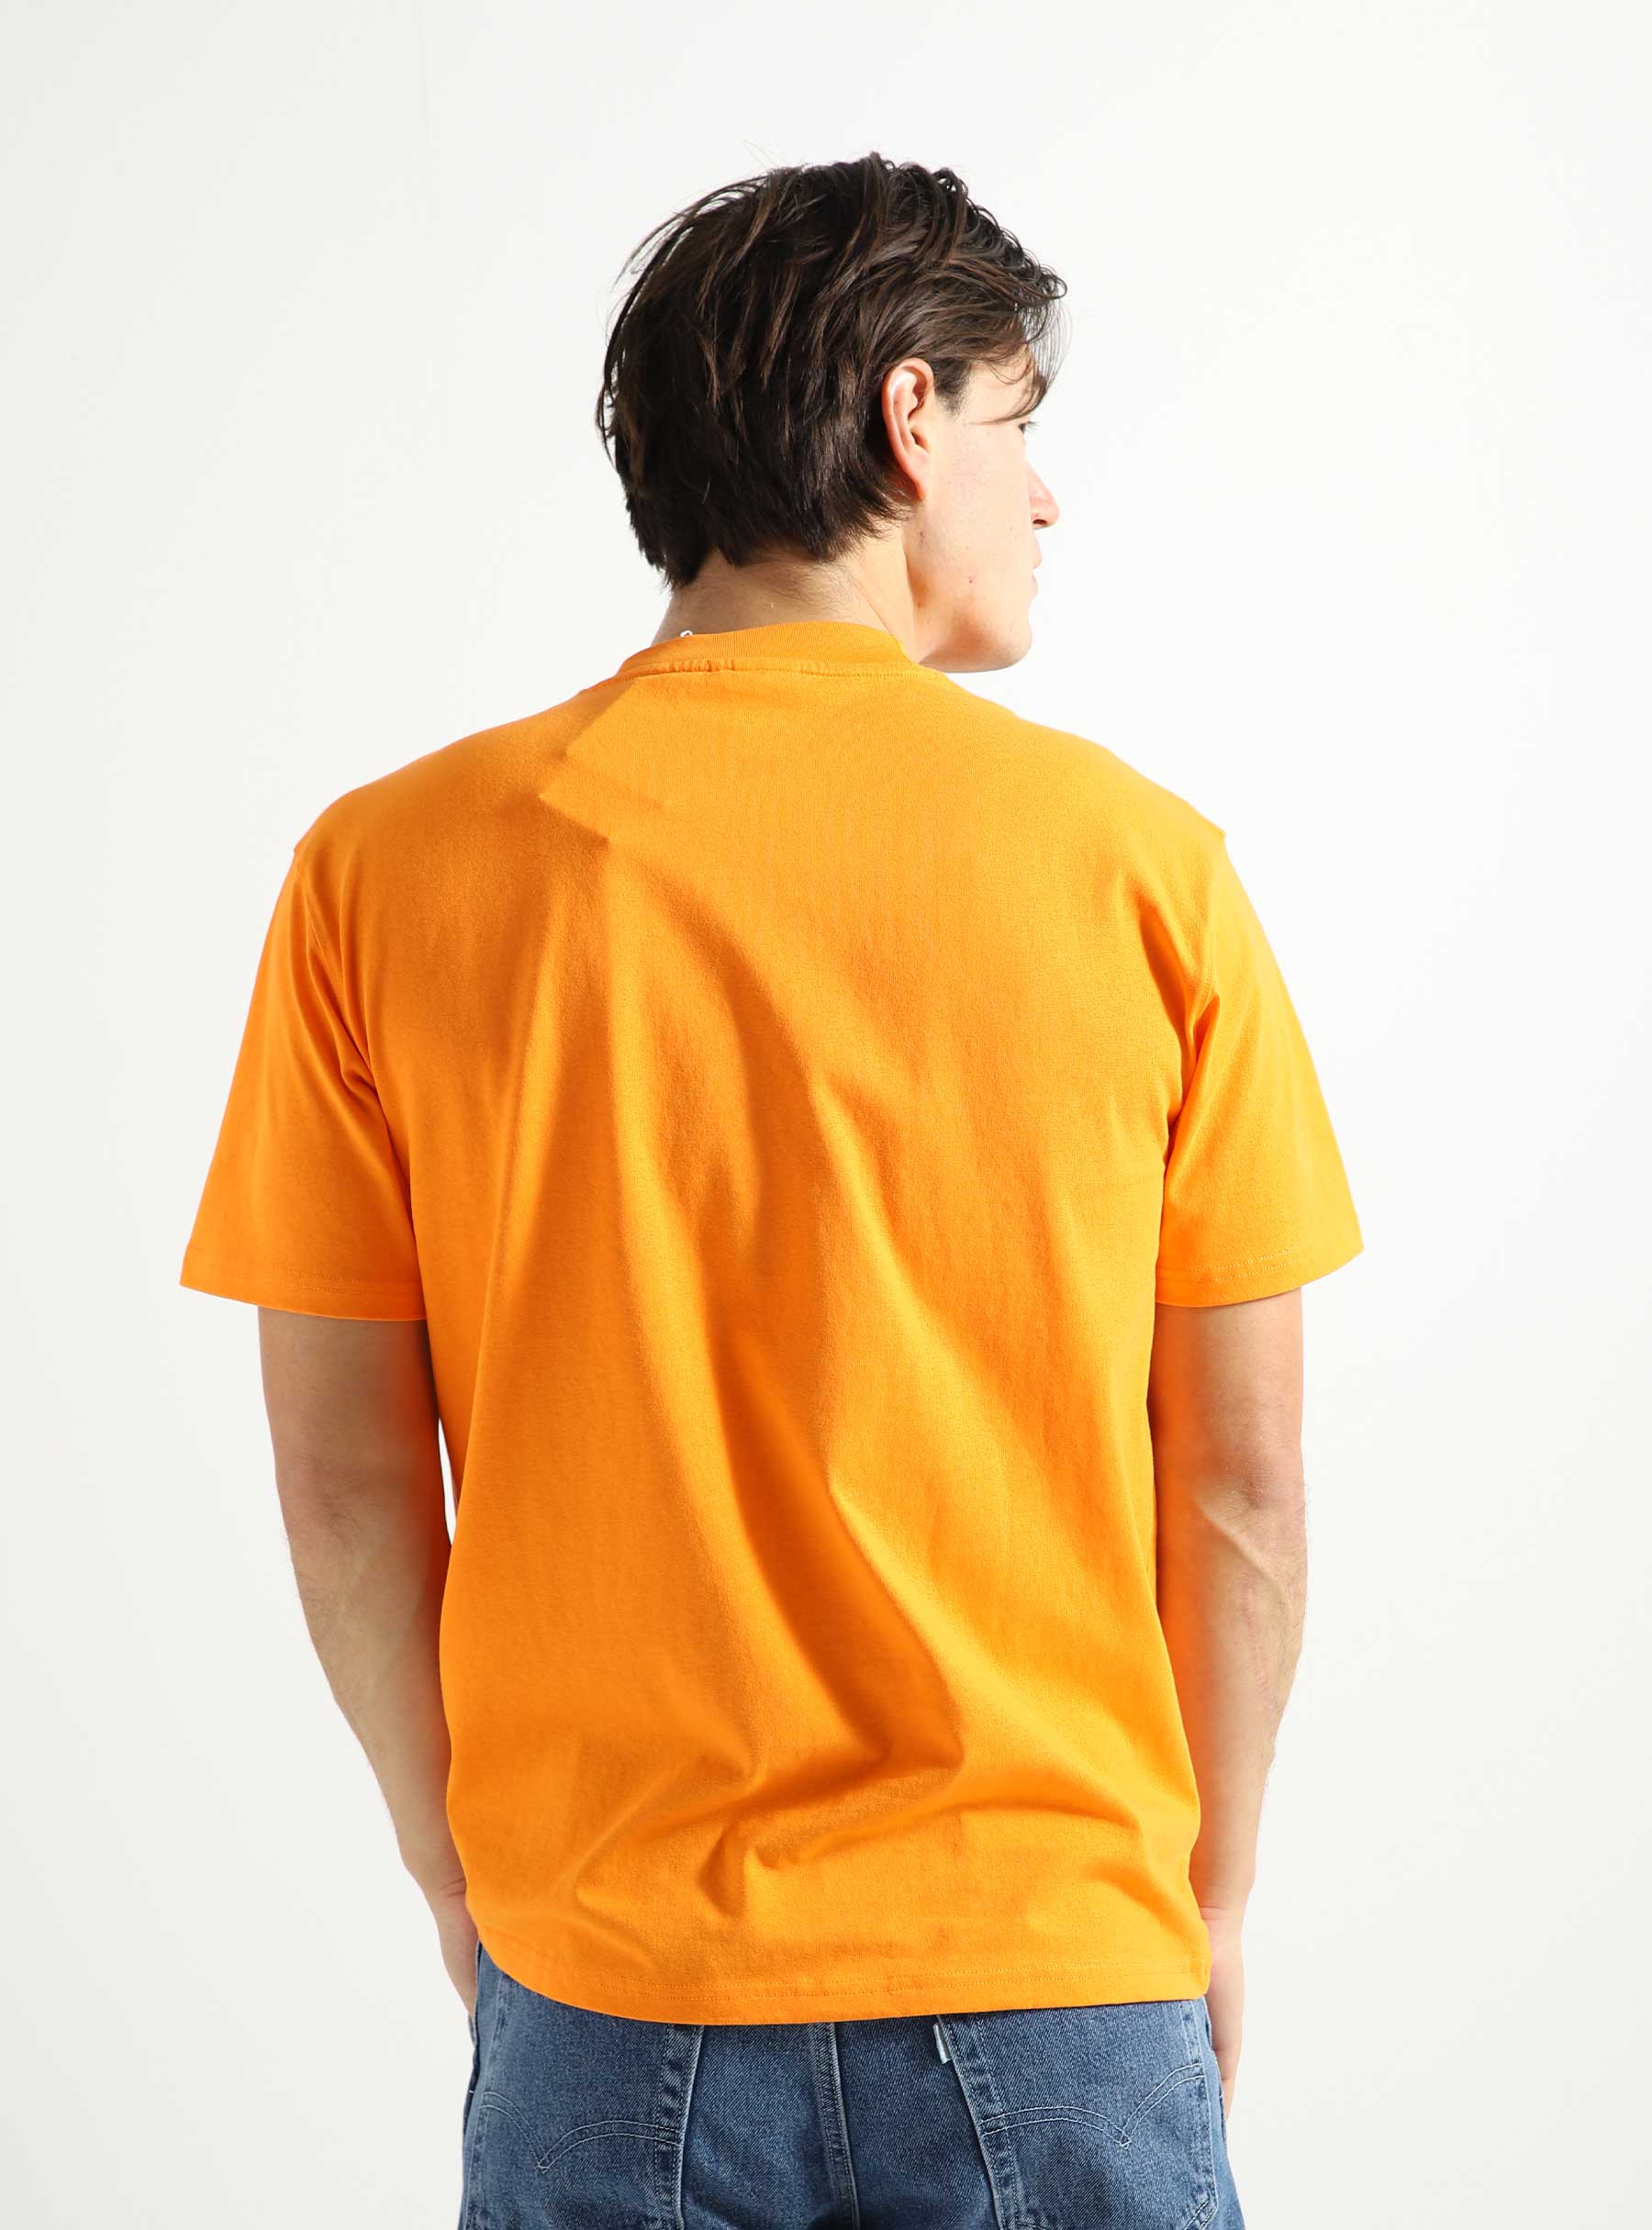 Freshcotton x T-shirt Orange - Pleasures Puma Puma Typo